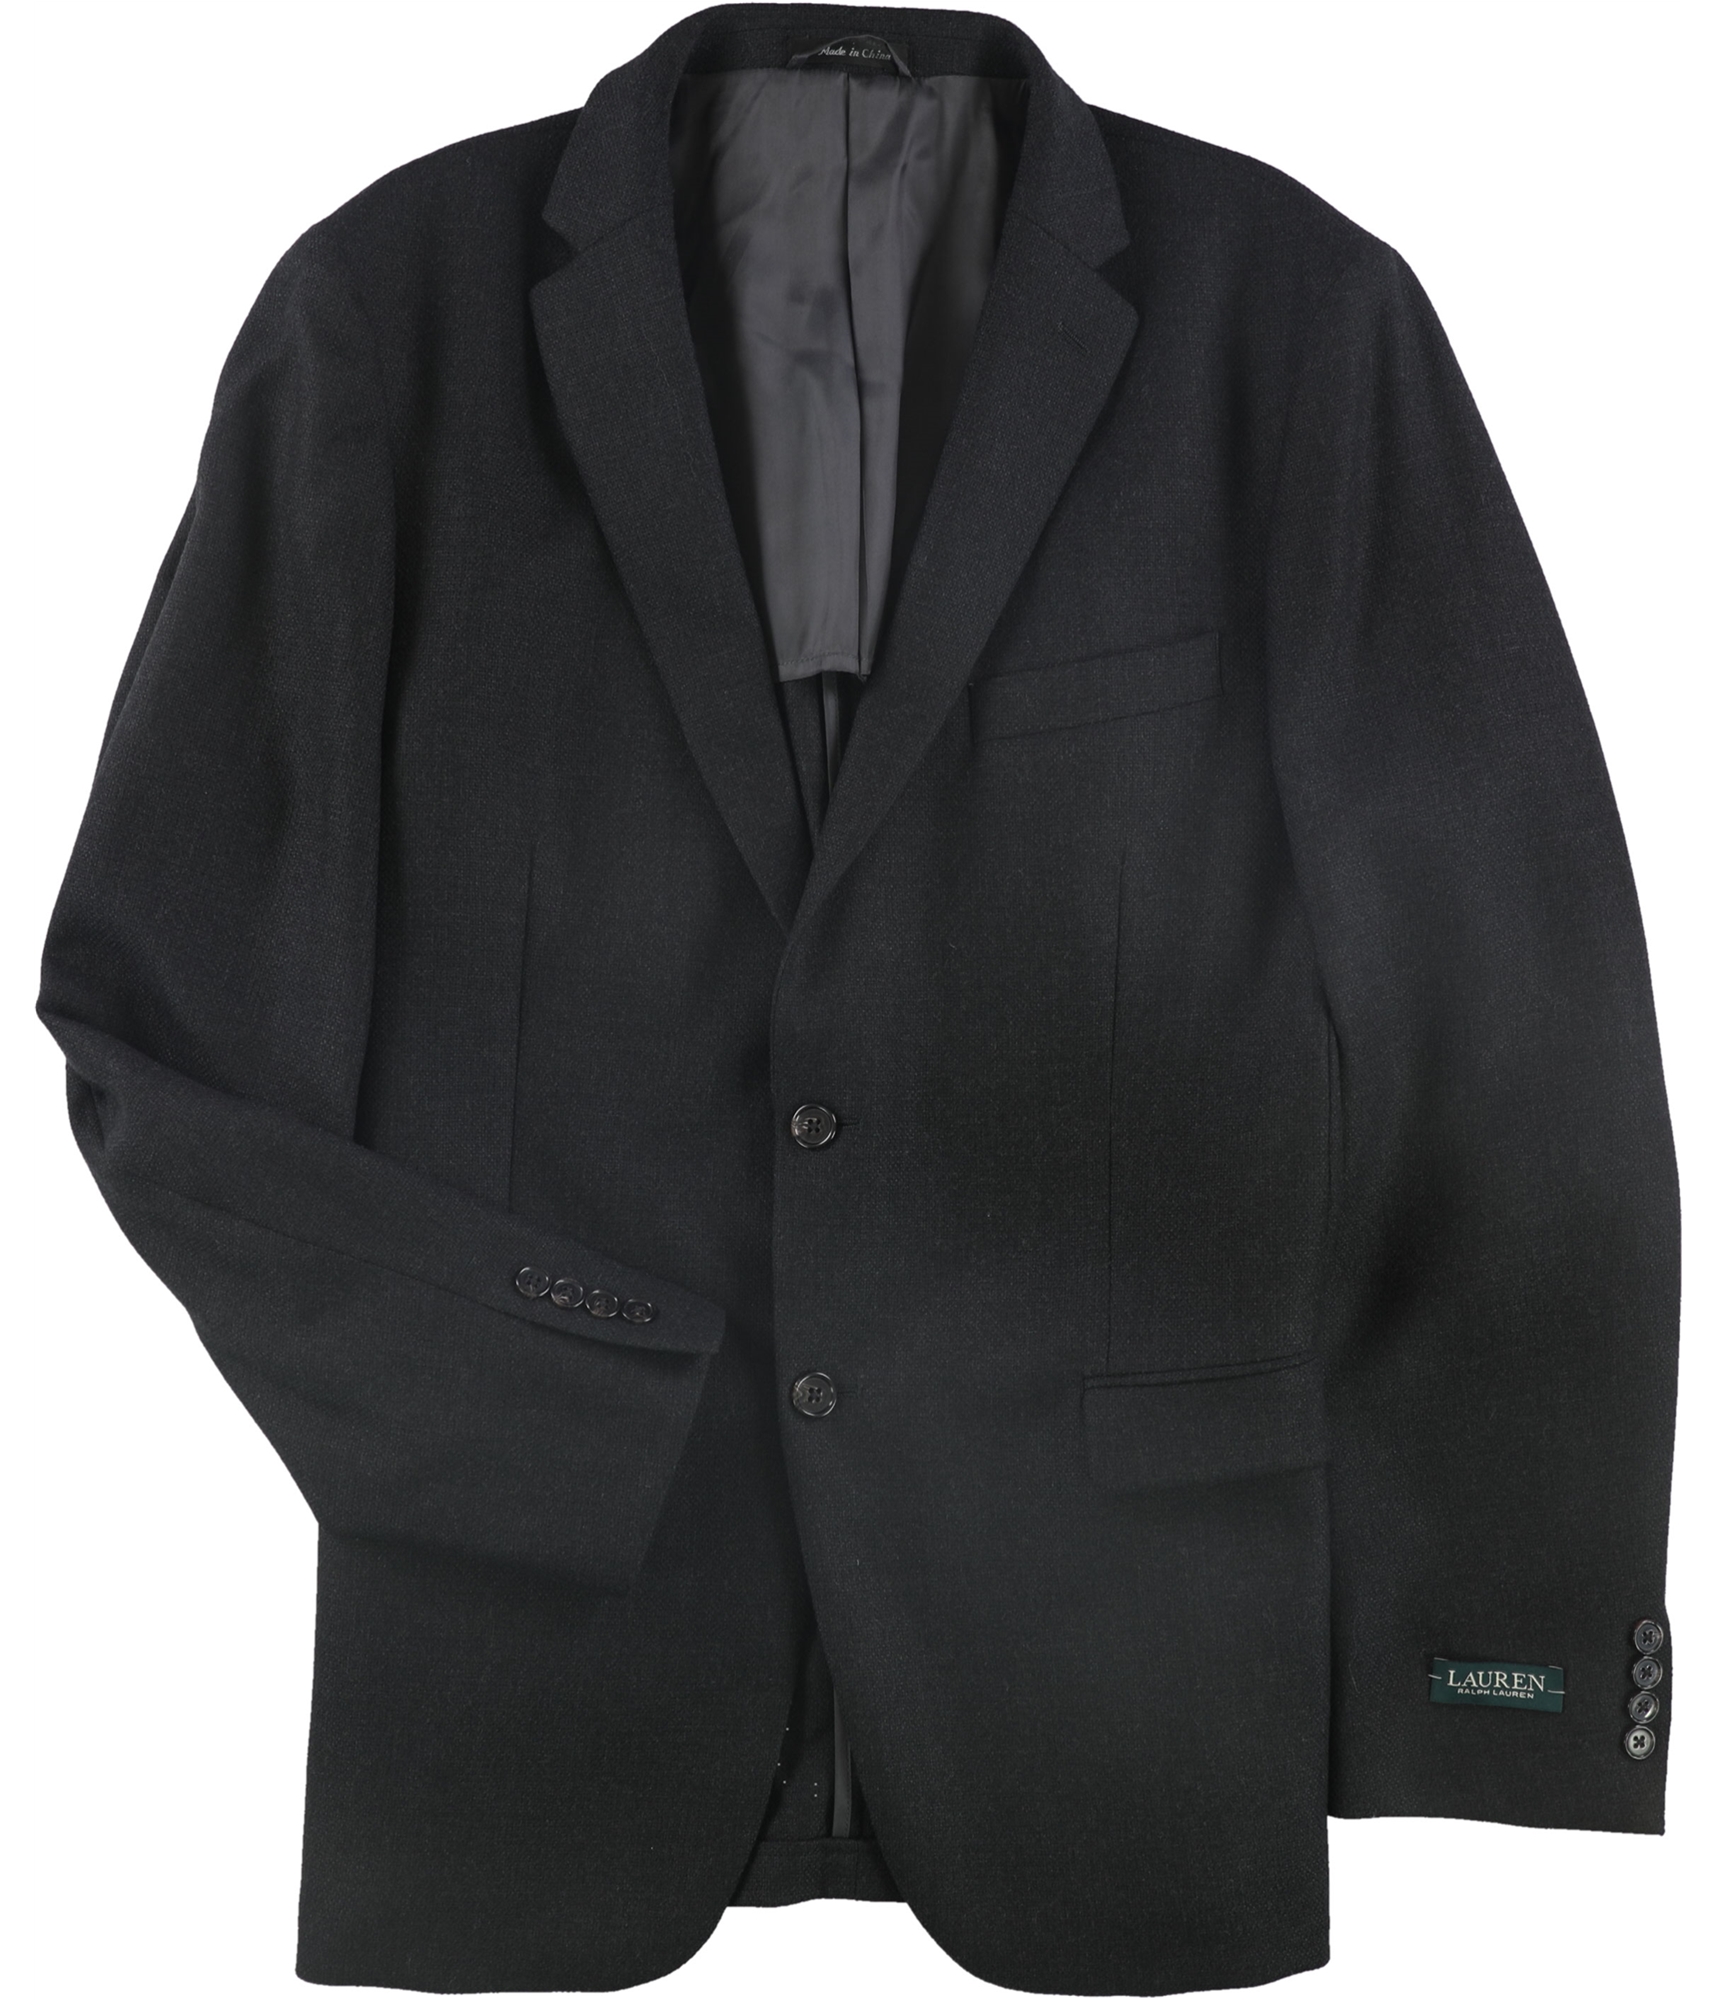 Ralph Lauren Mens Solid Two Button Blazer Jacket, Black, 44 Long | eBay